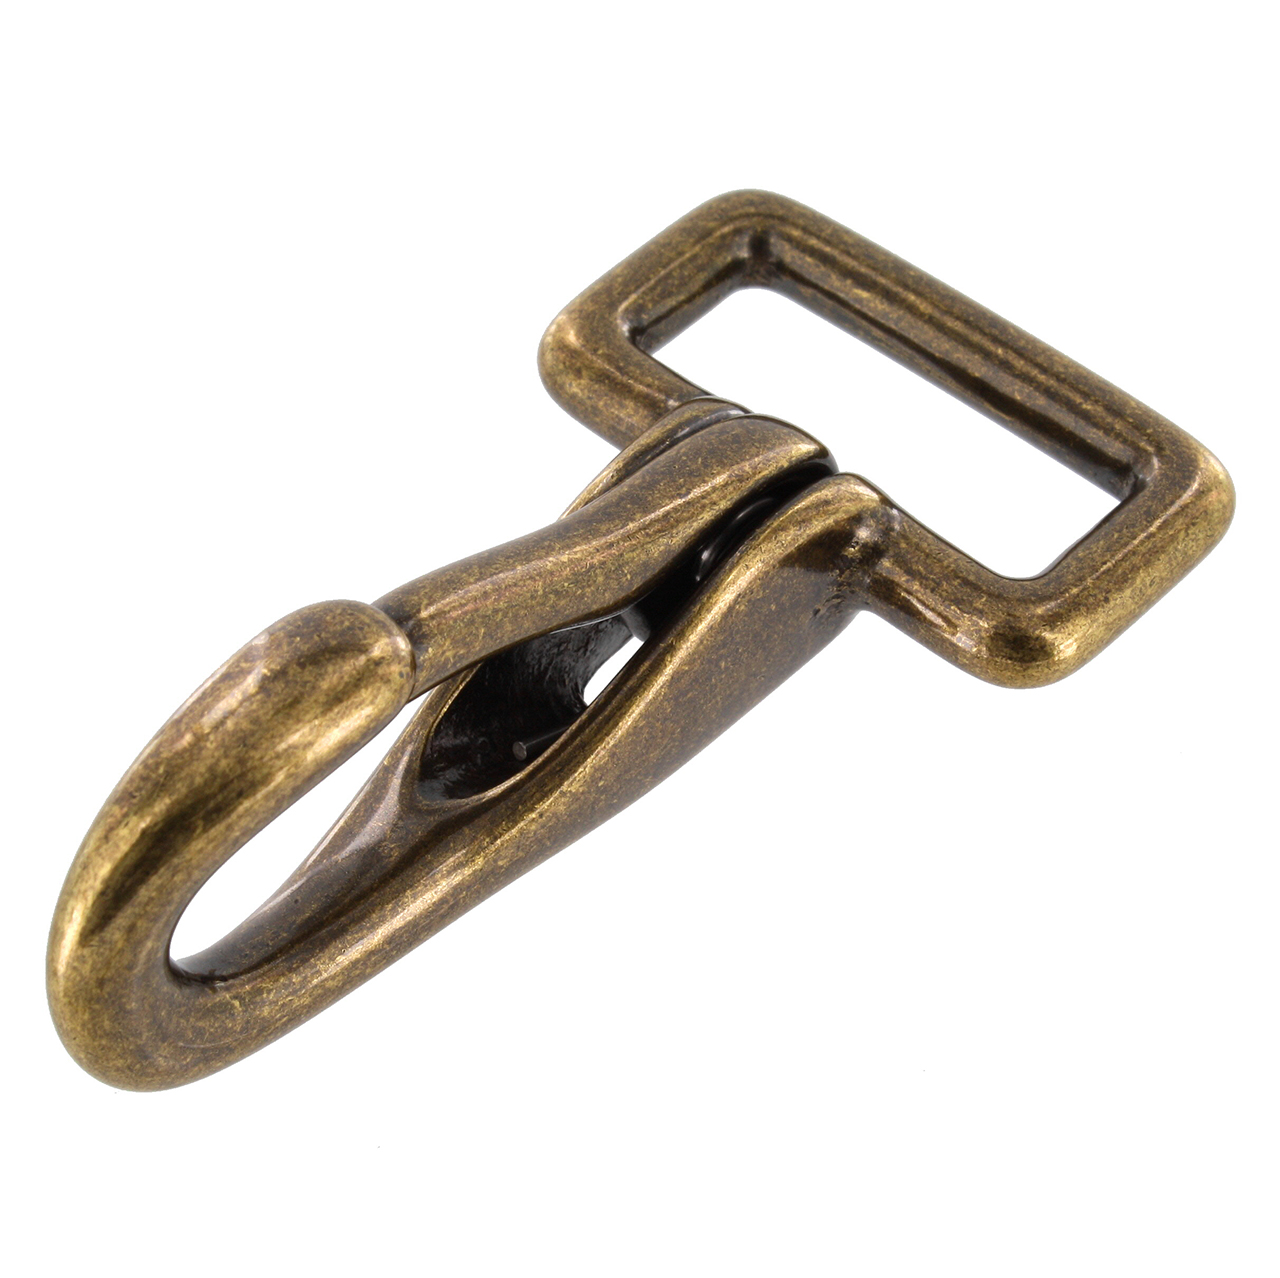 Realeather Swivel Snap Hooks - Antique Brass, Pkg of 2